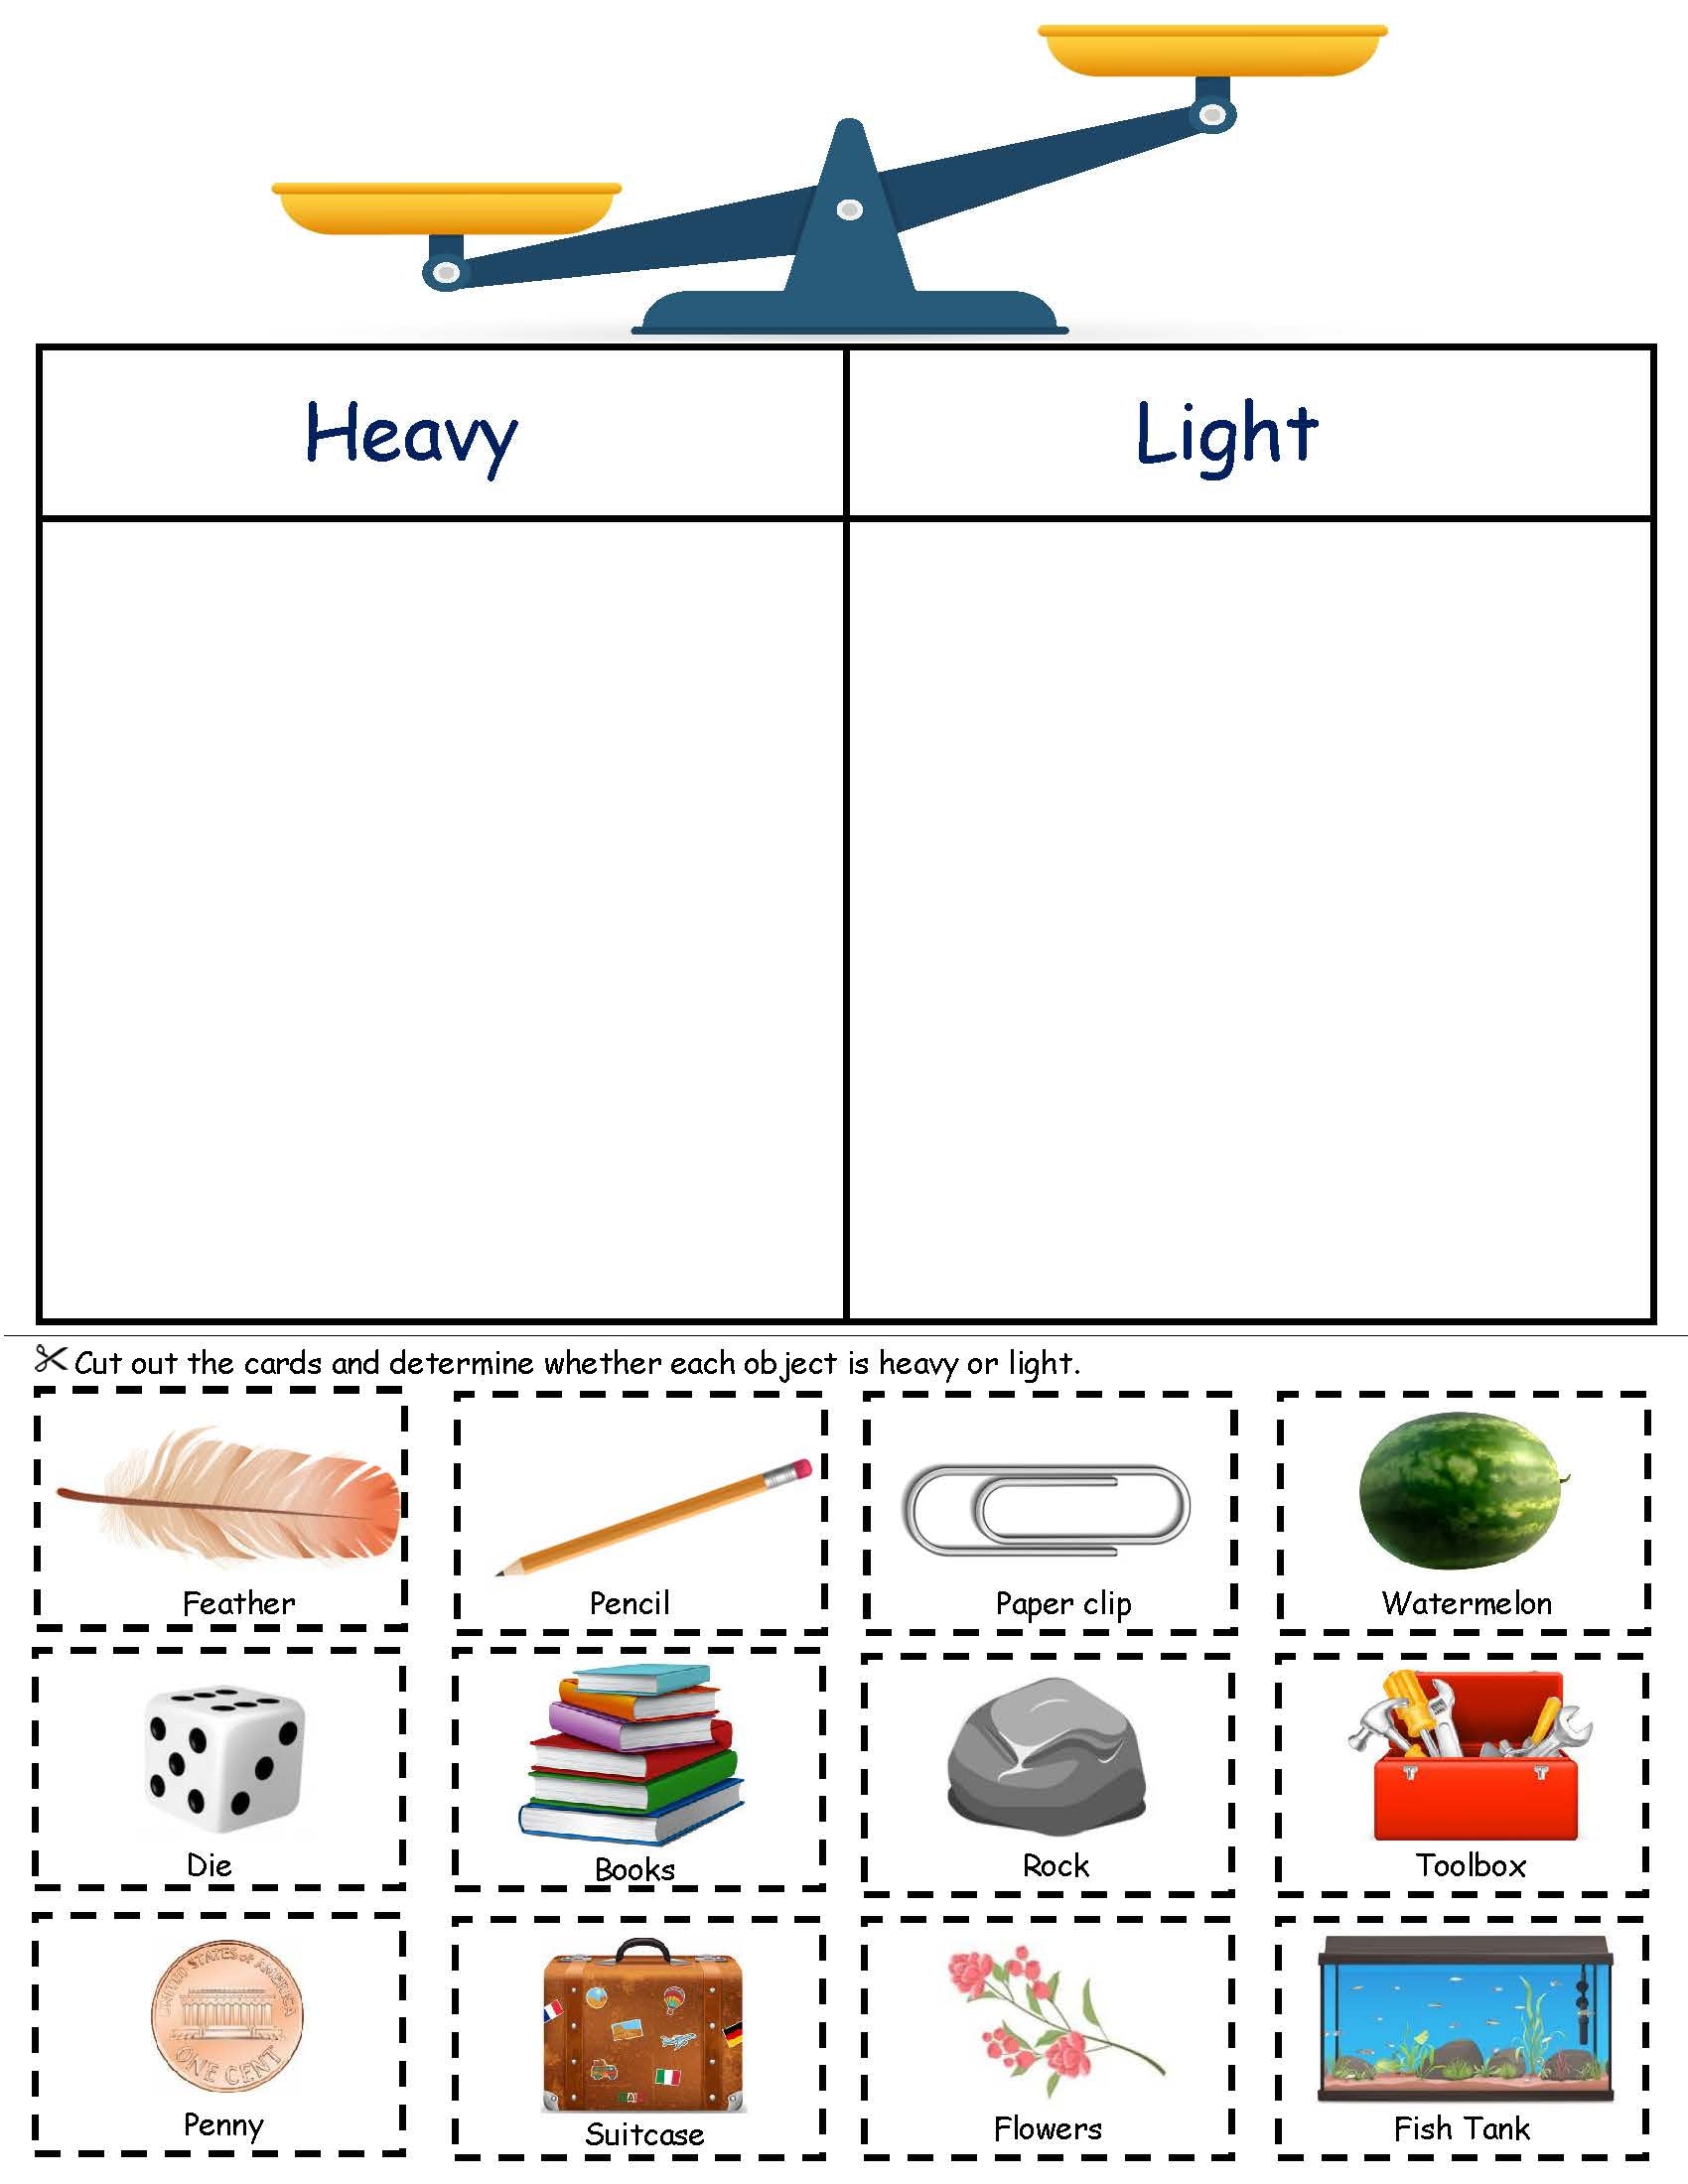 Heavy vs Light Experiment Sheet